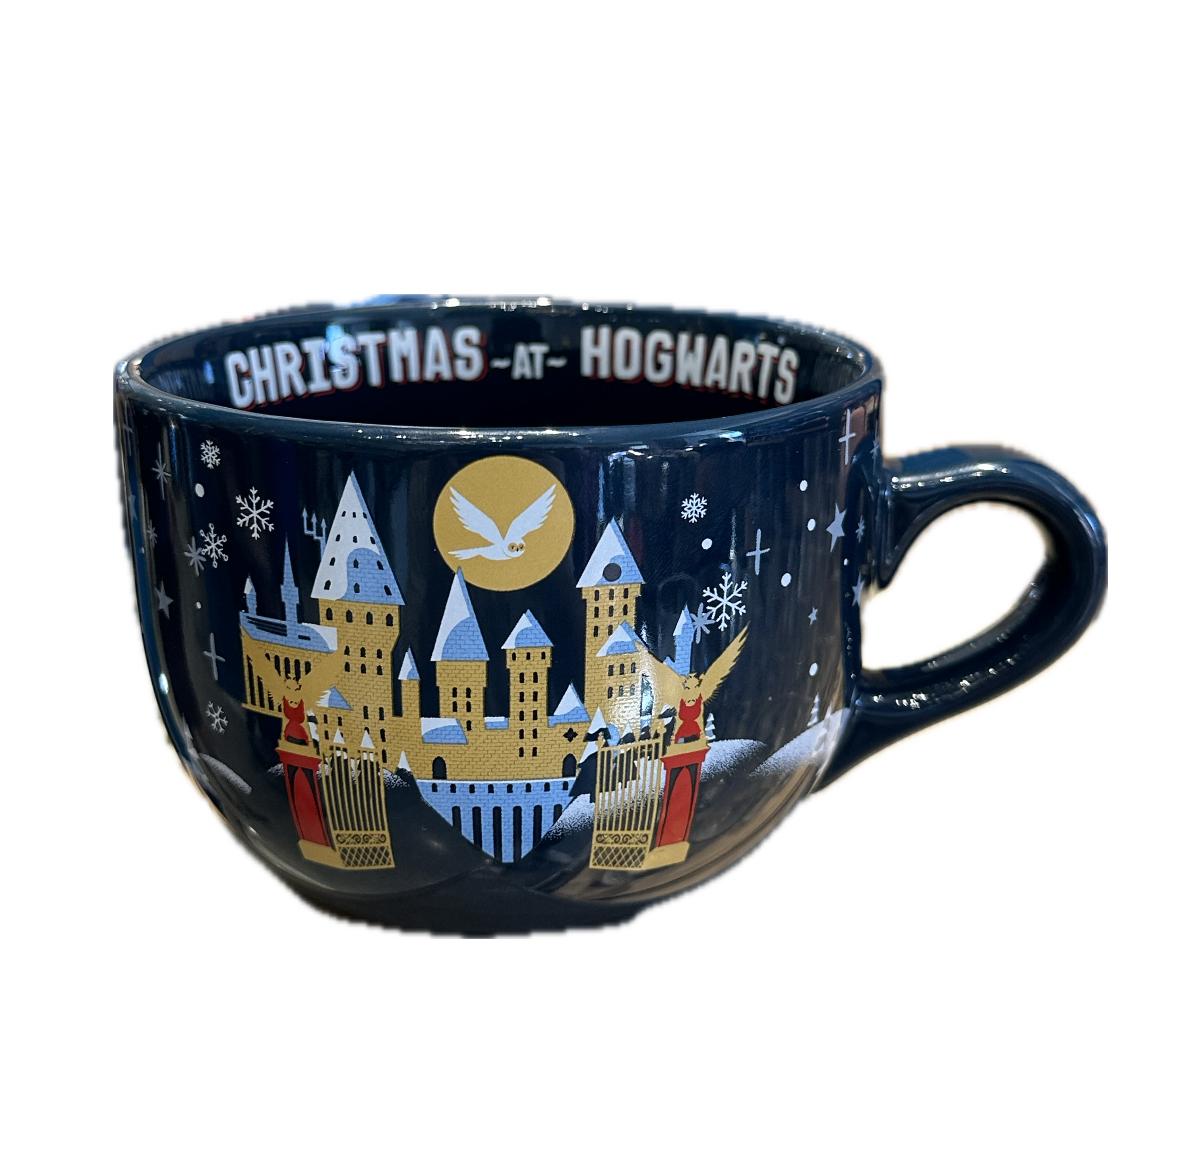 Universal Studios Harry Potter Christmas at Hogwarts Holiday Coffee Mug New